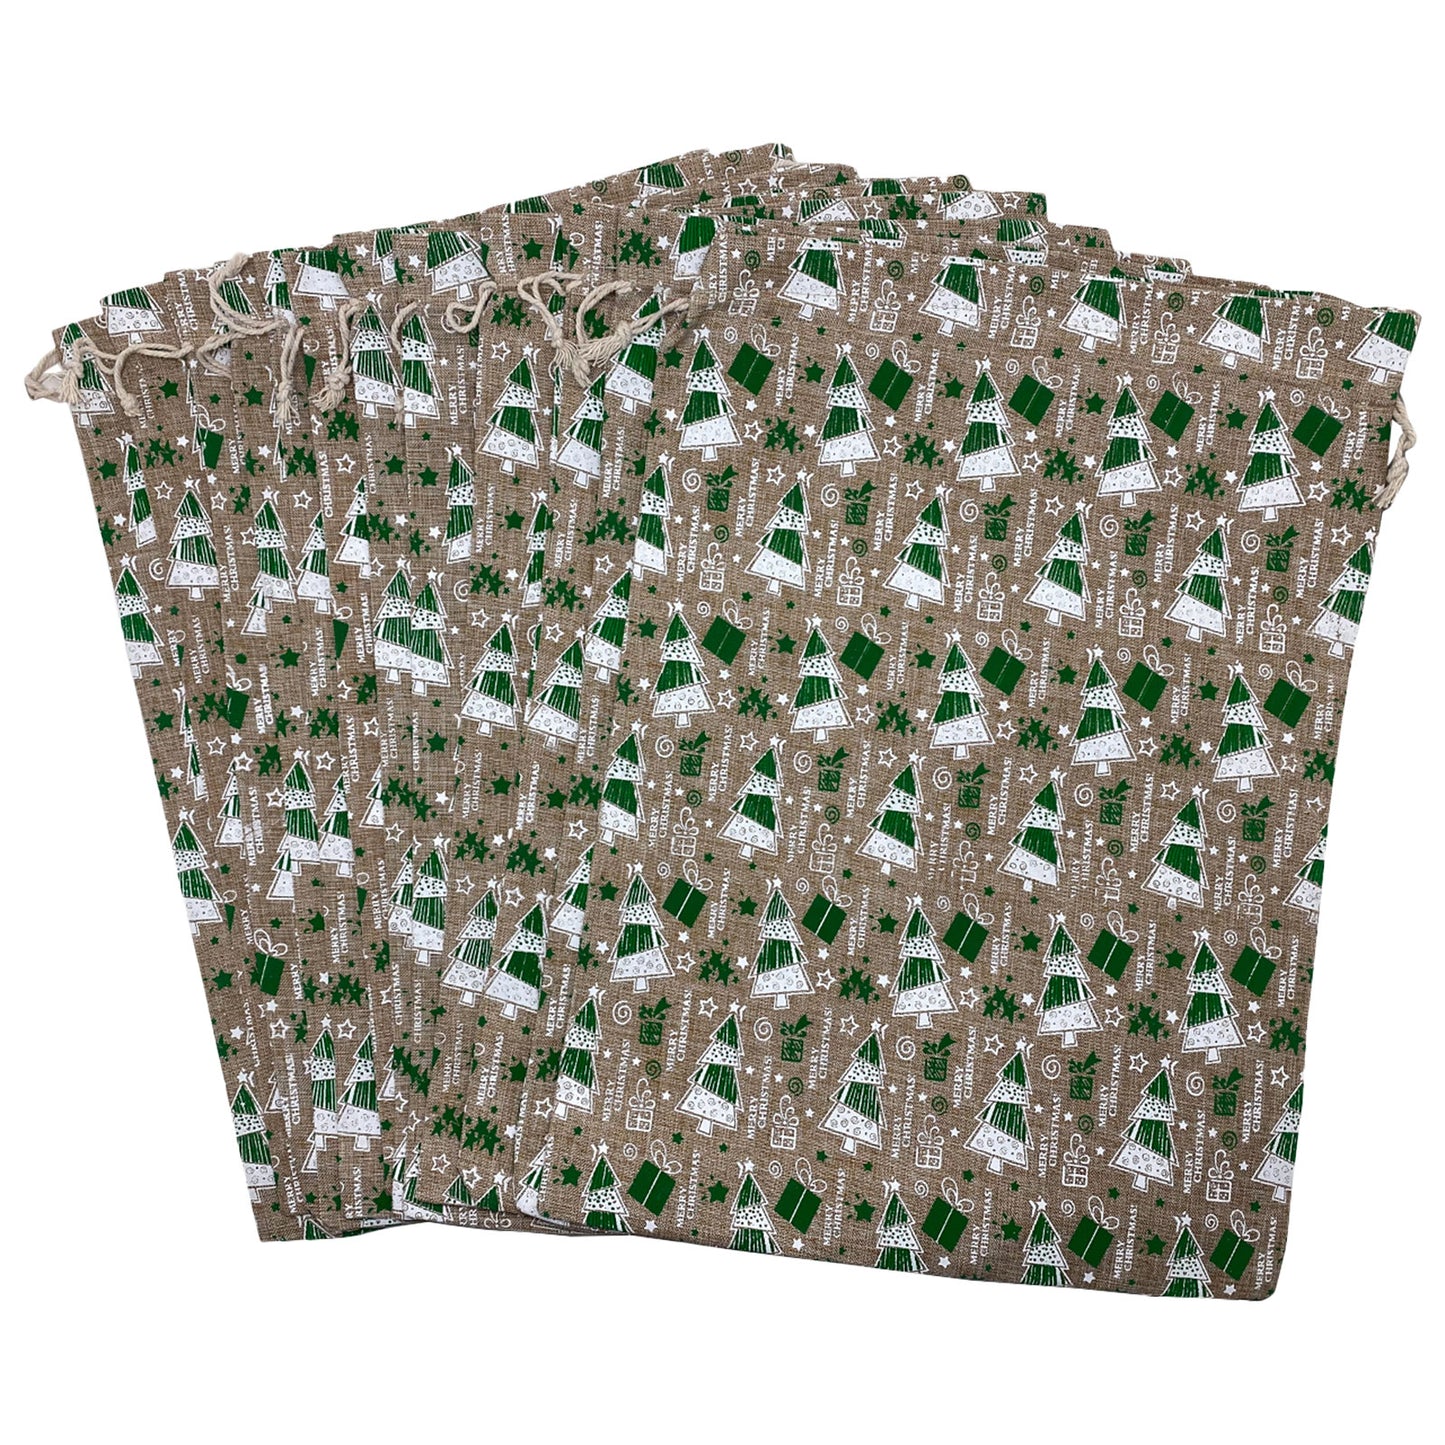 12" x 16" Jute Burlap Green Christmas Tree Drawstring Gift Bags